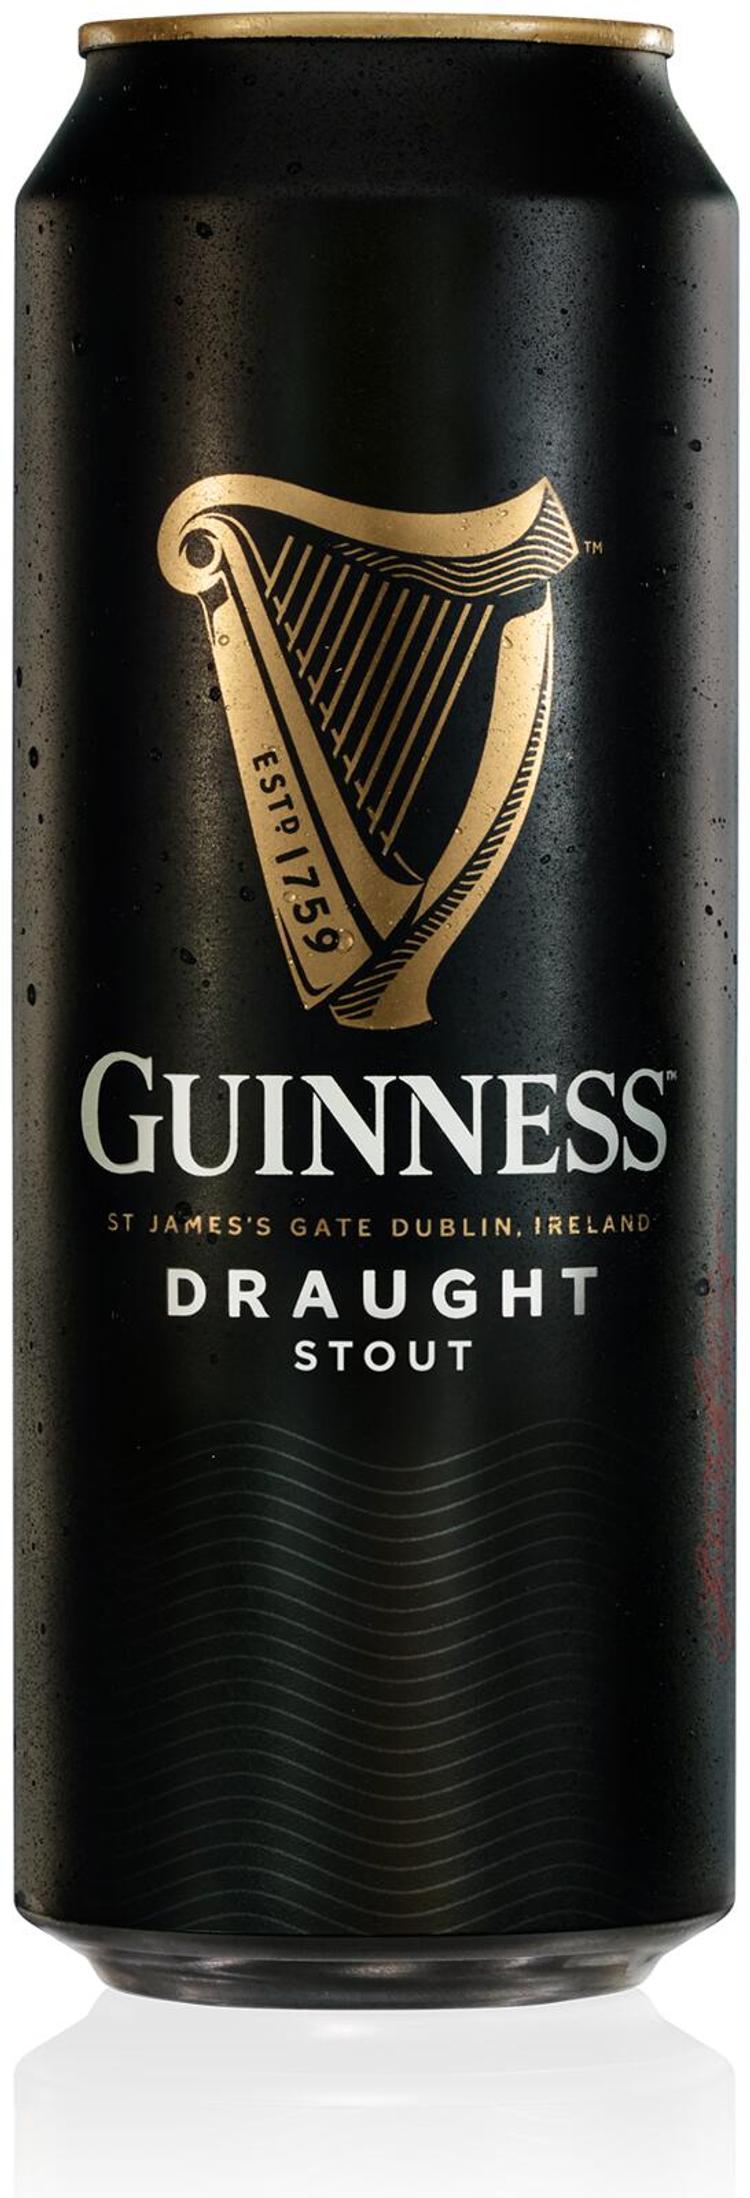 Guinness Draught Stout olut 4,2% 0,44 l